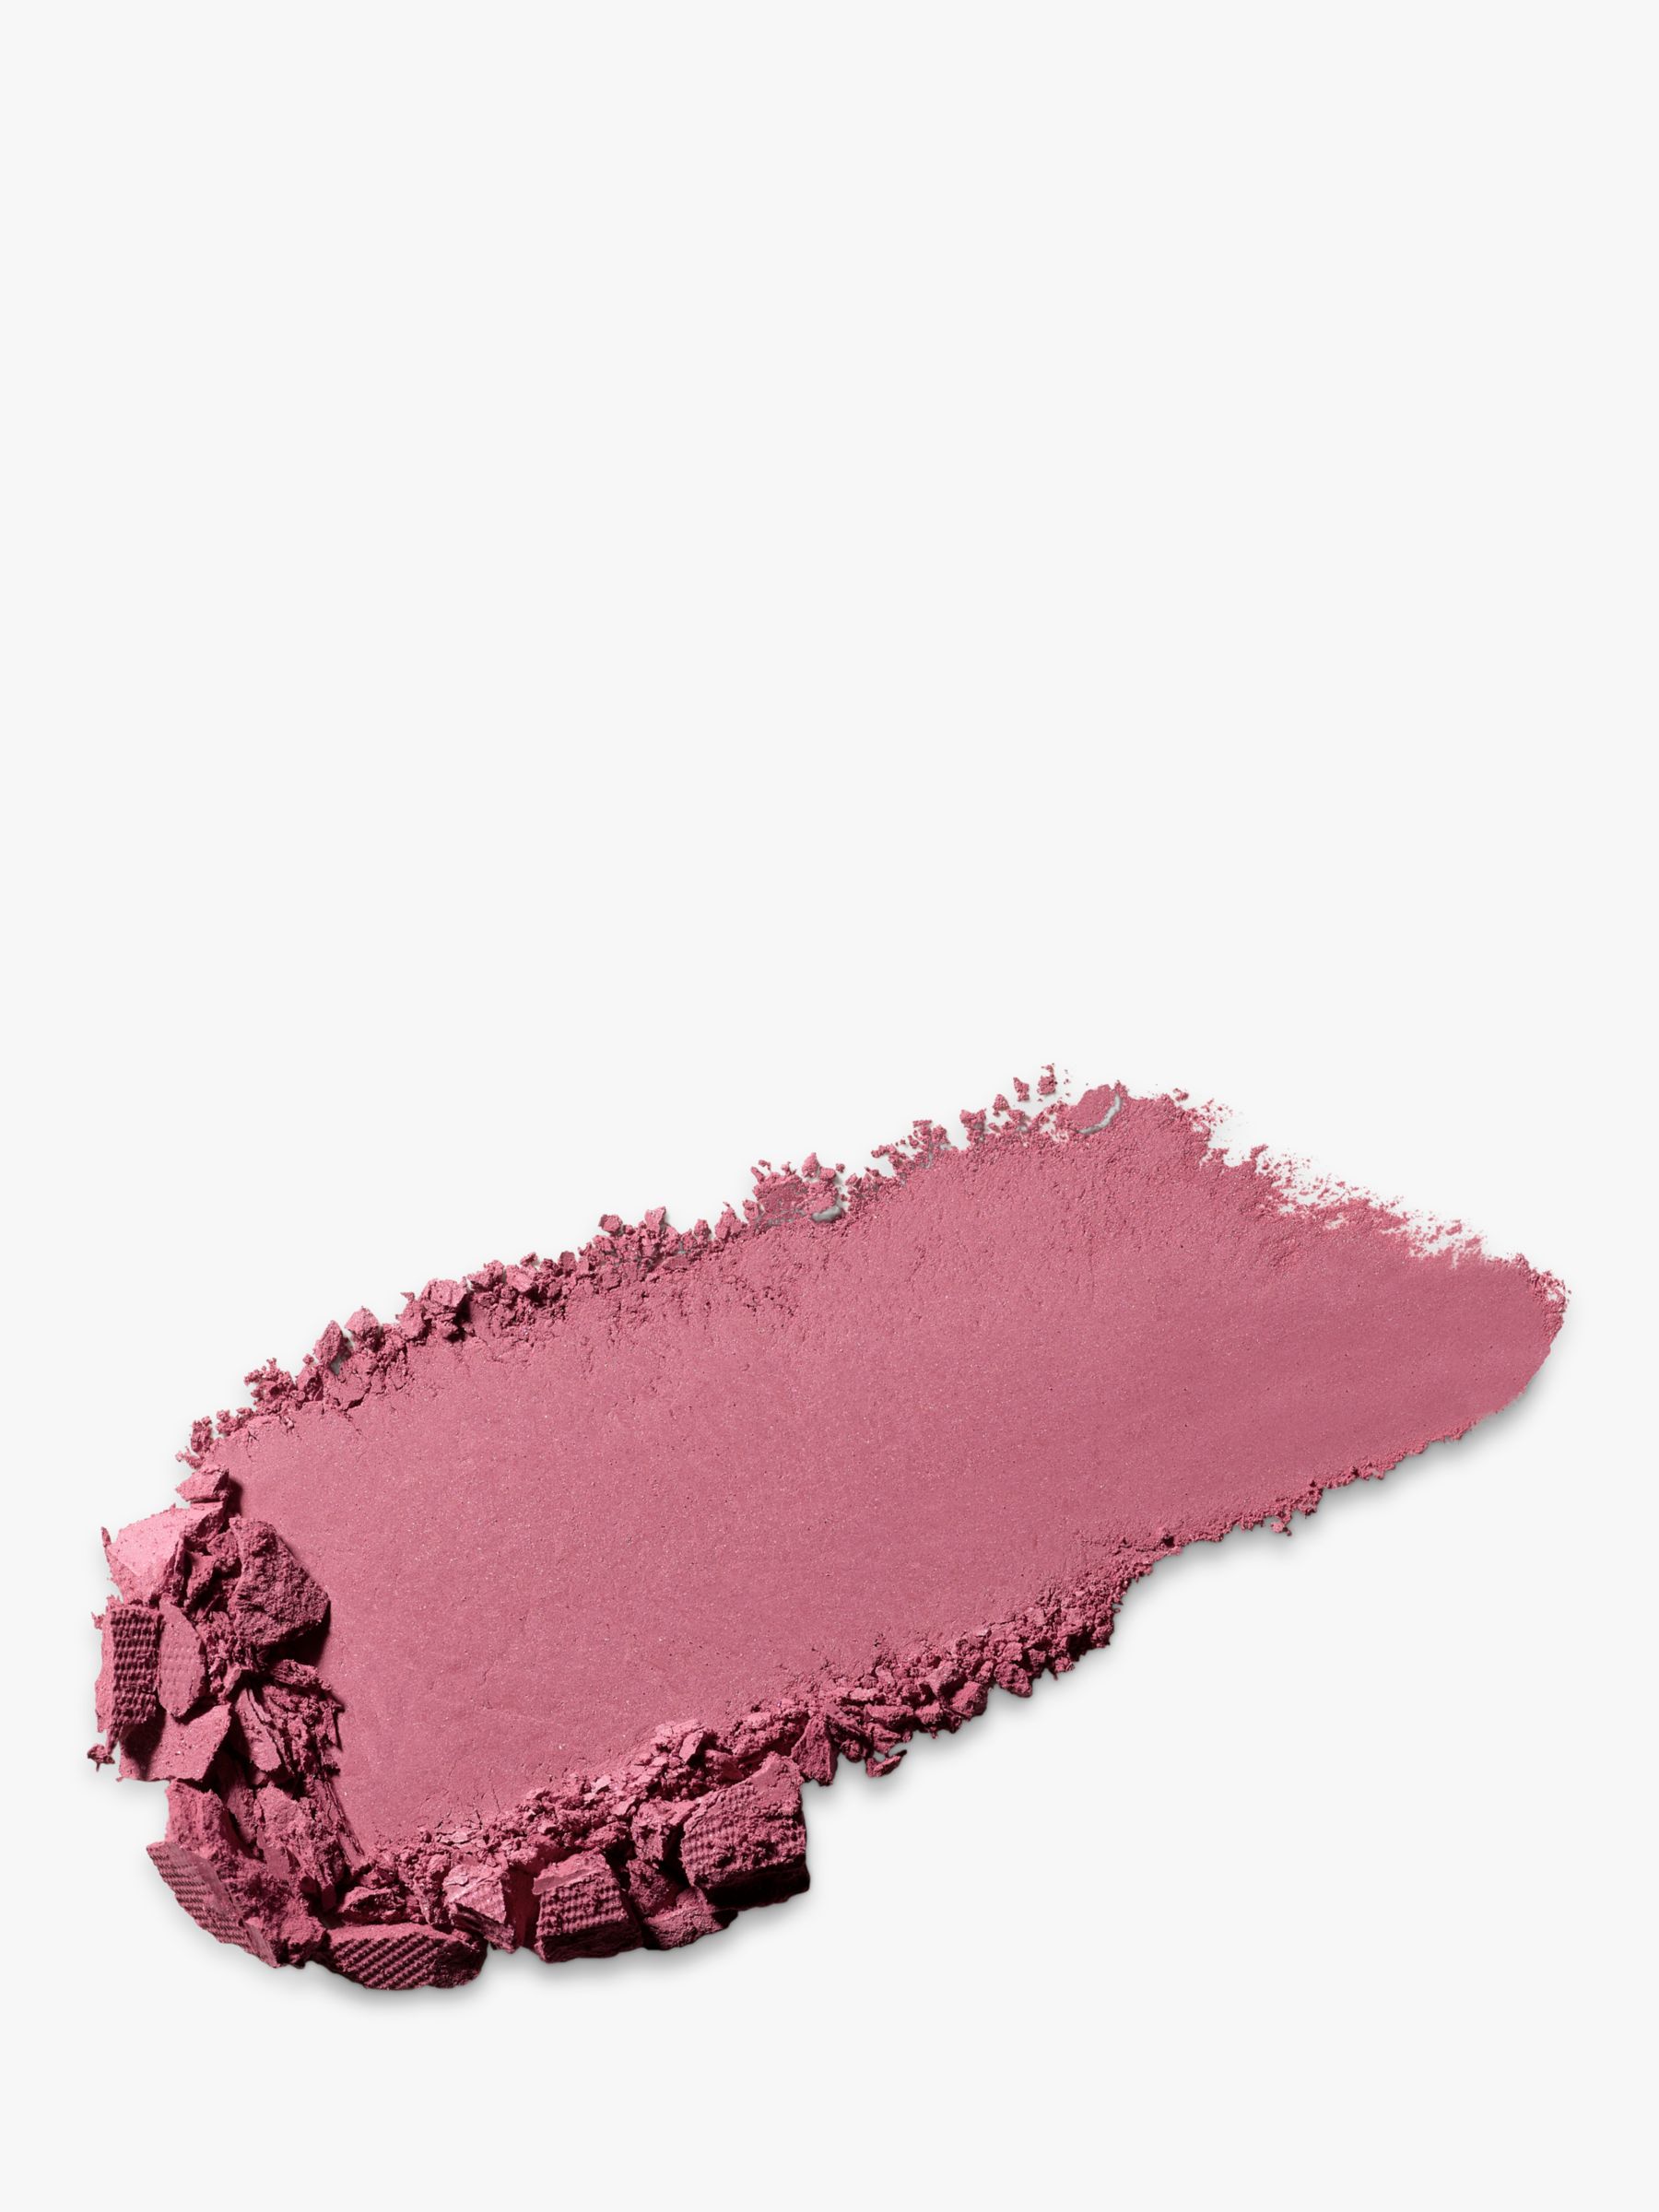 MAC Cosmetics *Nippy's Pink Rose* Powder Blush Whitney Houston